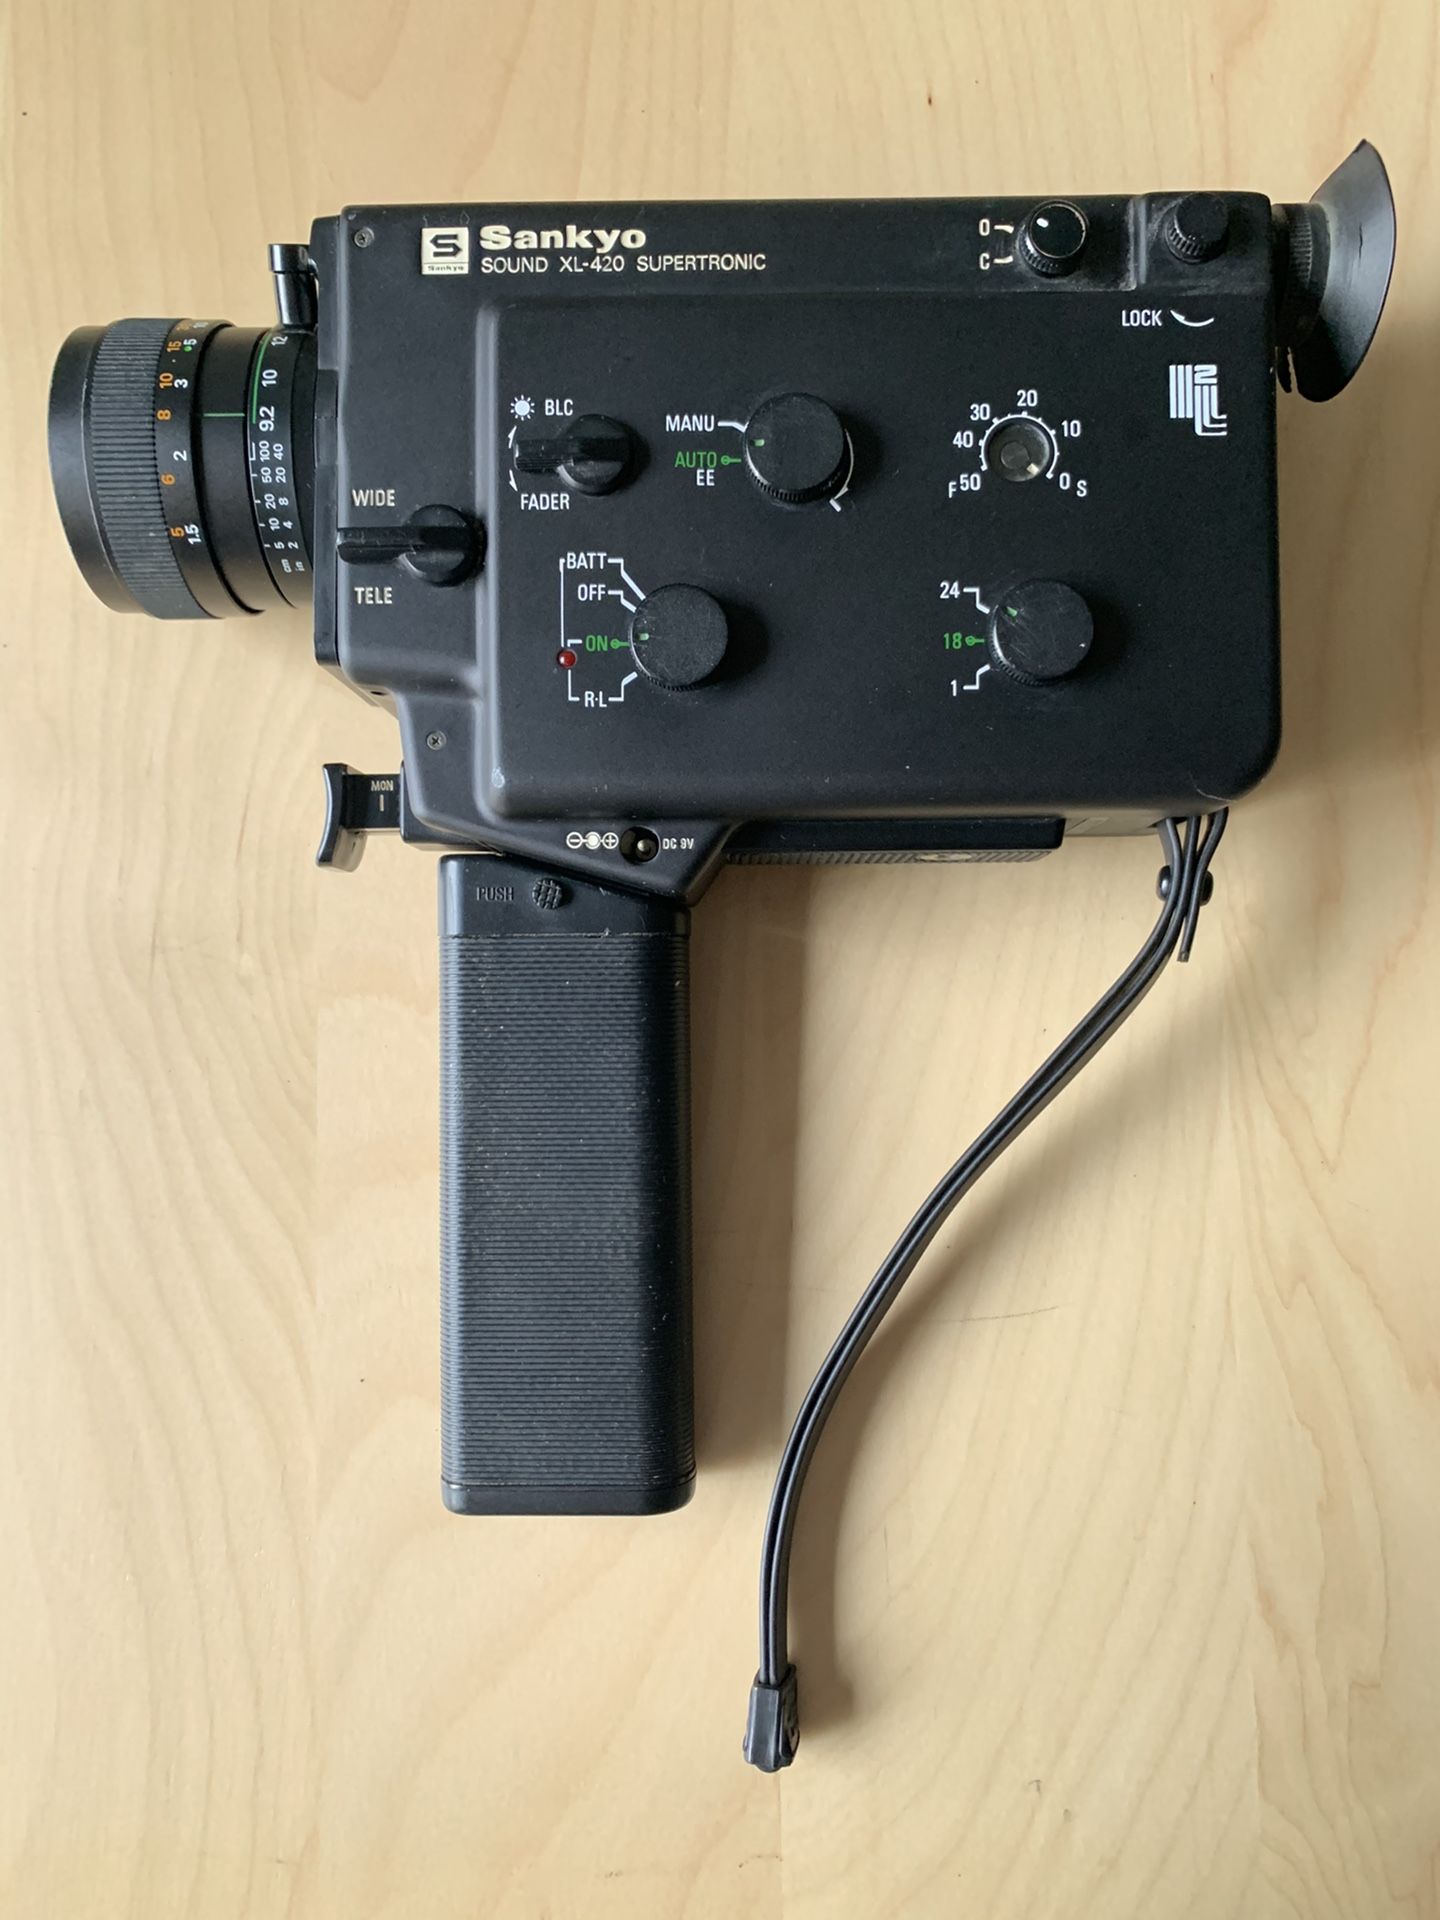 Sankyo Sound XL-420 Supertronic, 8mm film camera